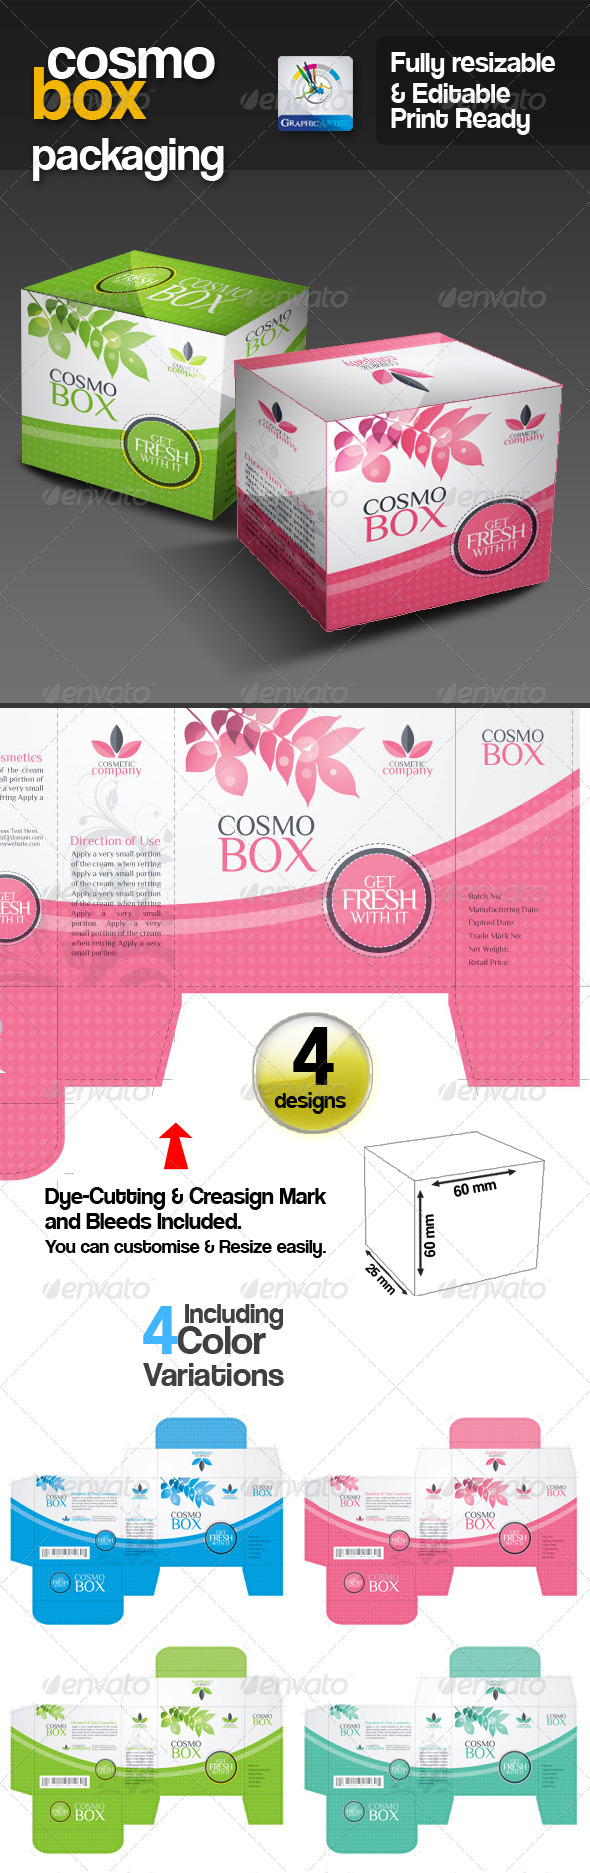 CosmoBox Packaging_Image-Preview.jpg